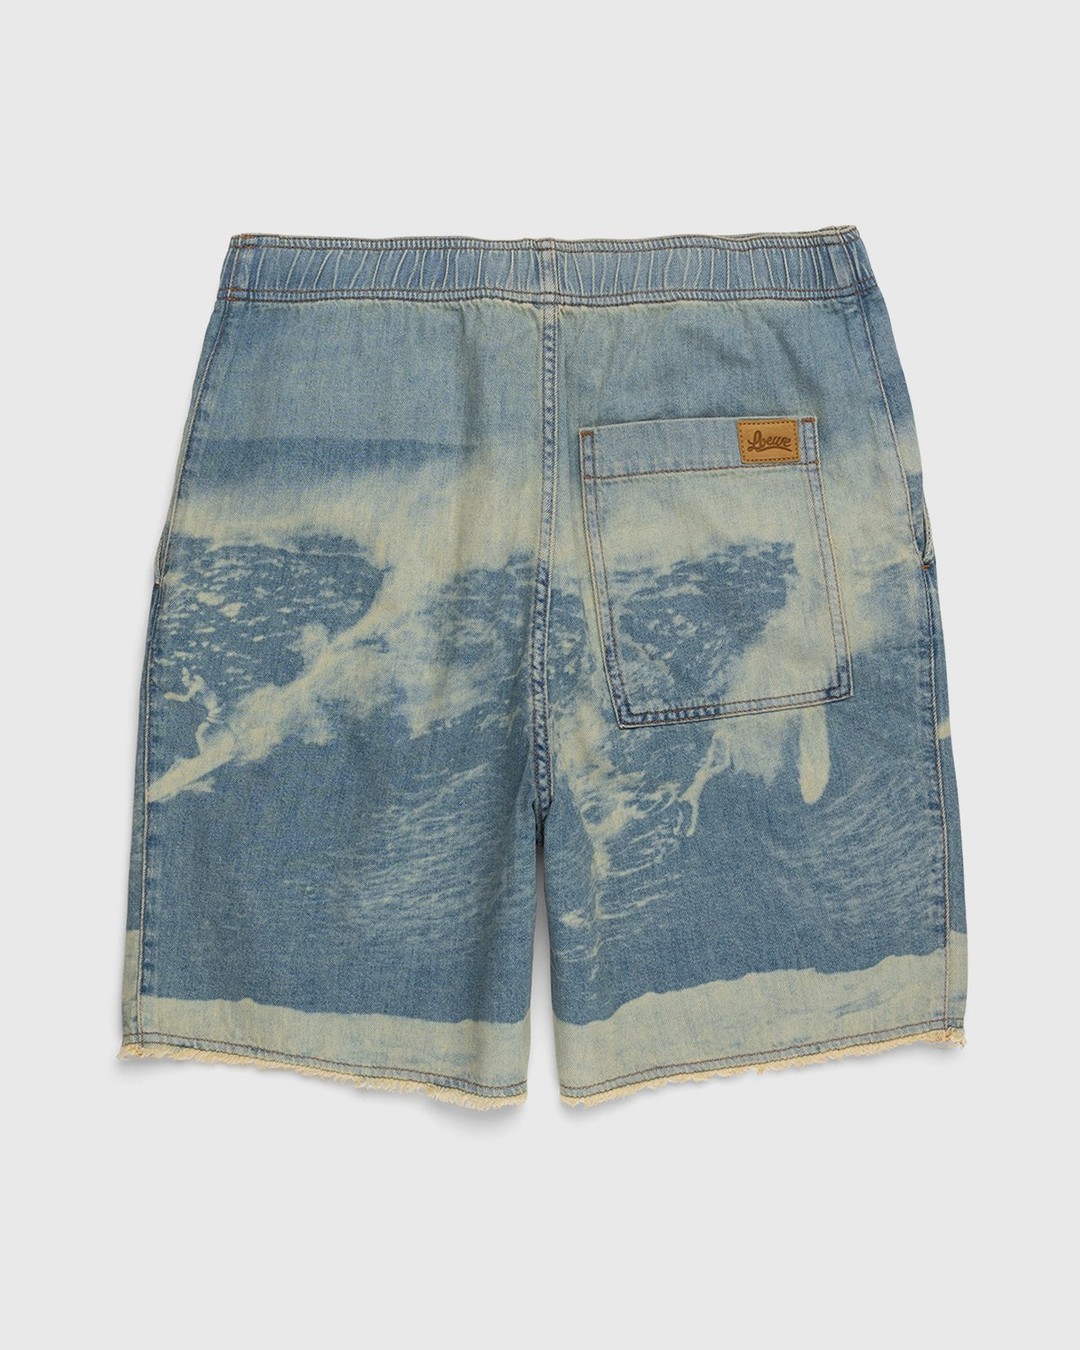 Loewe – Paula's Ibiza Surf Drawstring Denim Shorts Blue - Denim Shorts - Blue - Image 2